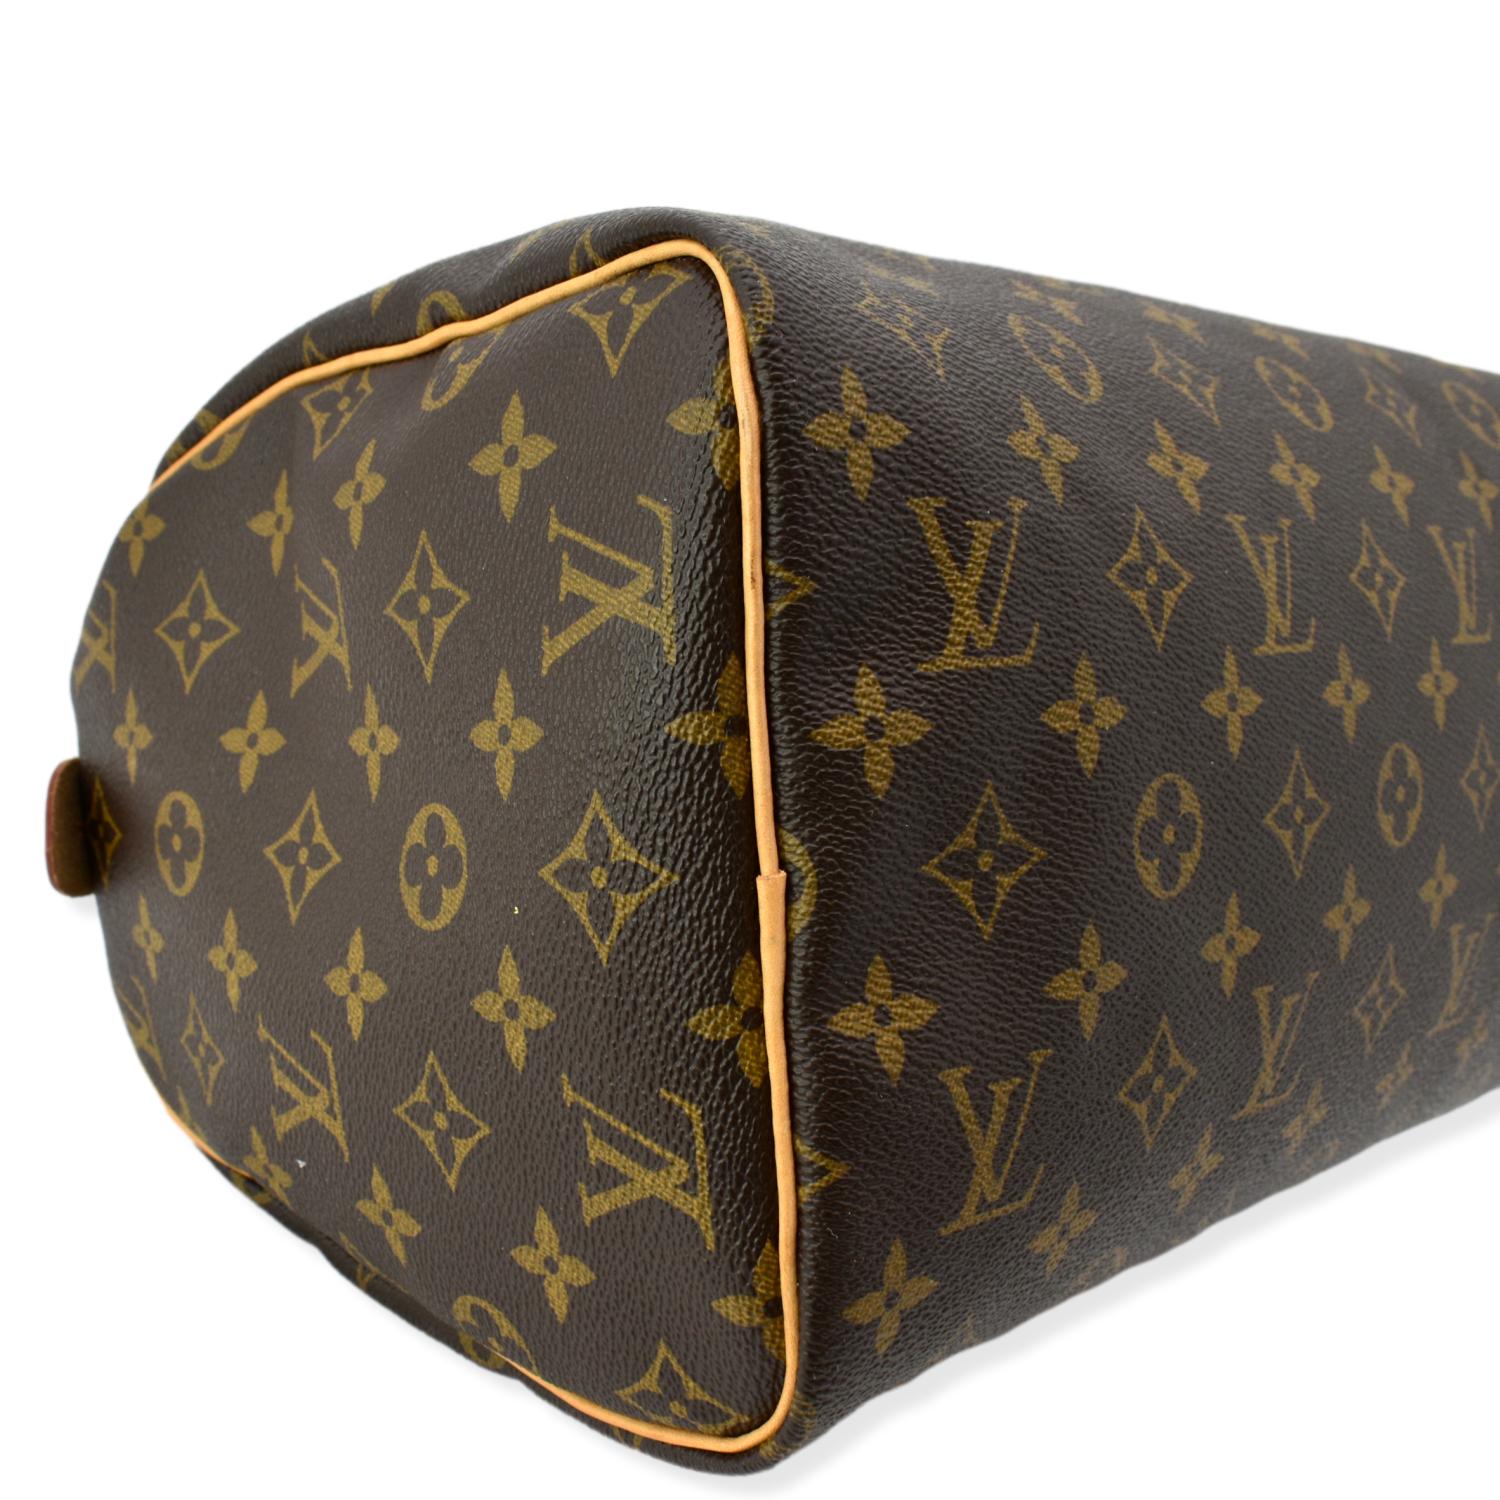 Louis Vuitton Speedy 30 Louis Vuitton 12 Duffel Bag Louis Vuitton Monogram  Satchel 12 Classic Louis Vuitton 12 Handbag 